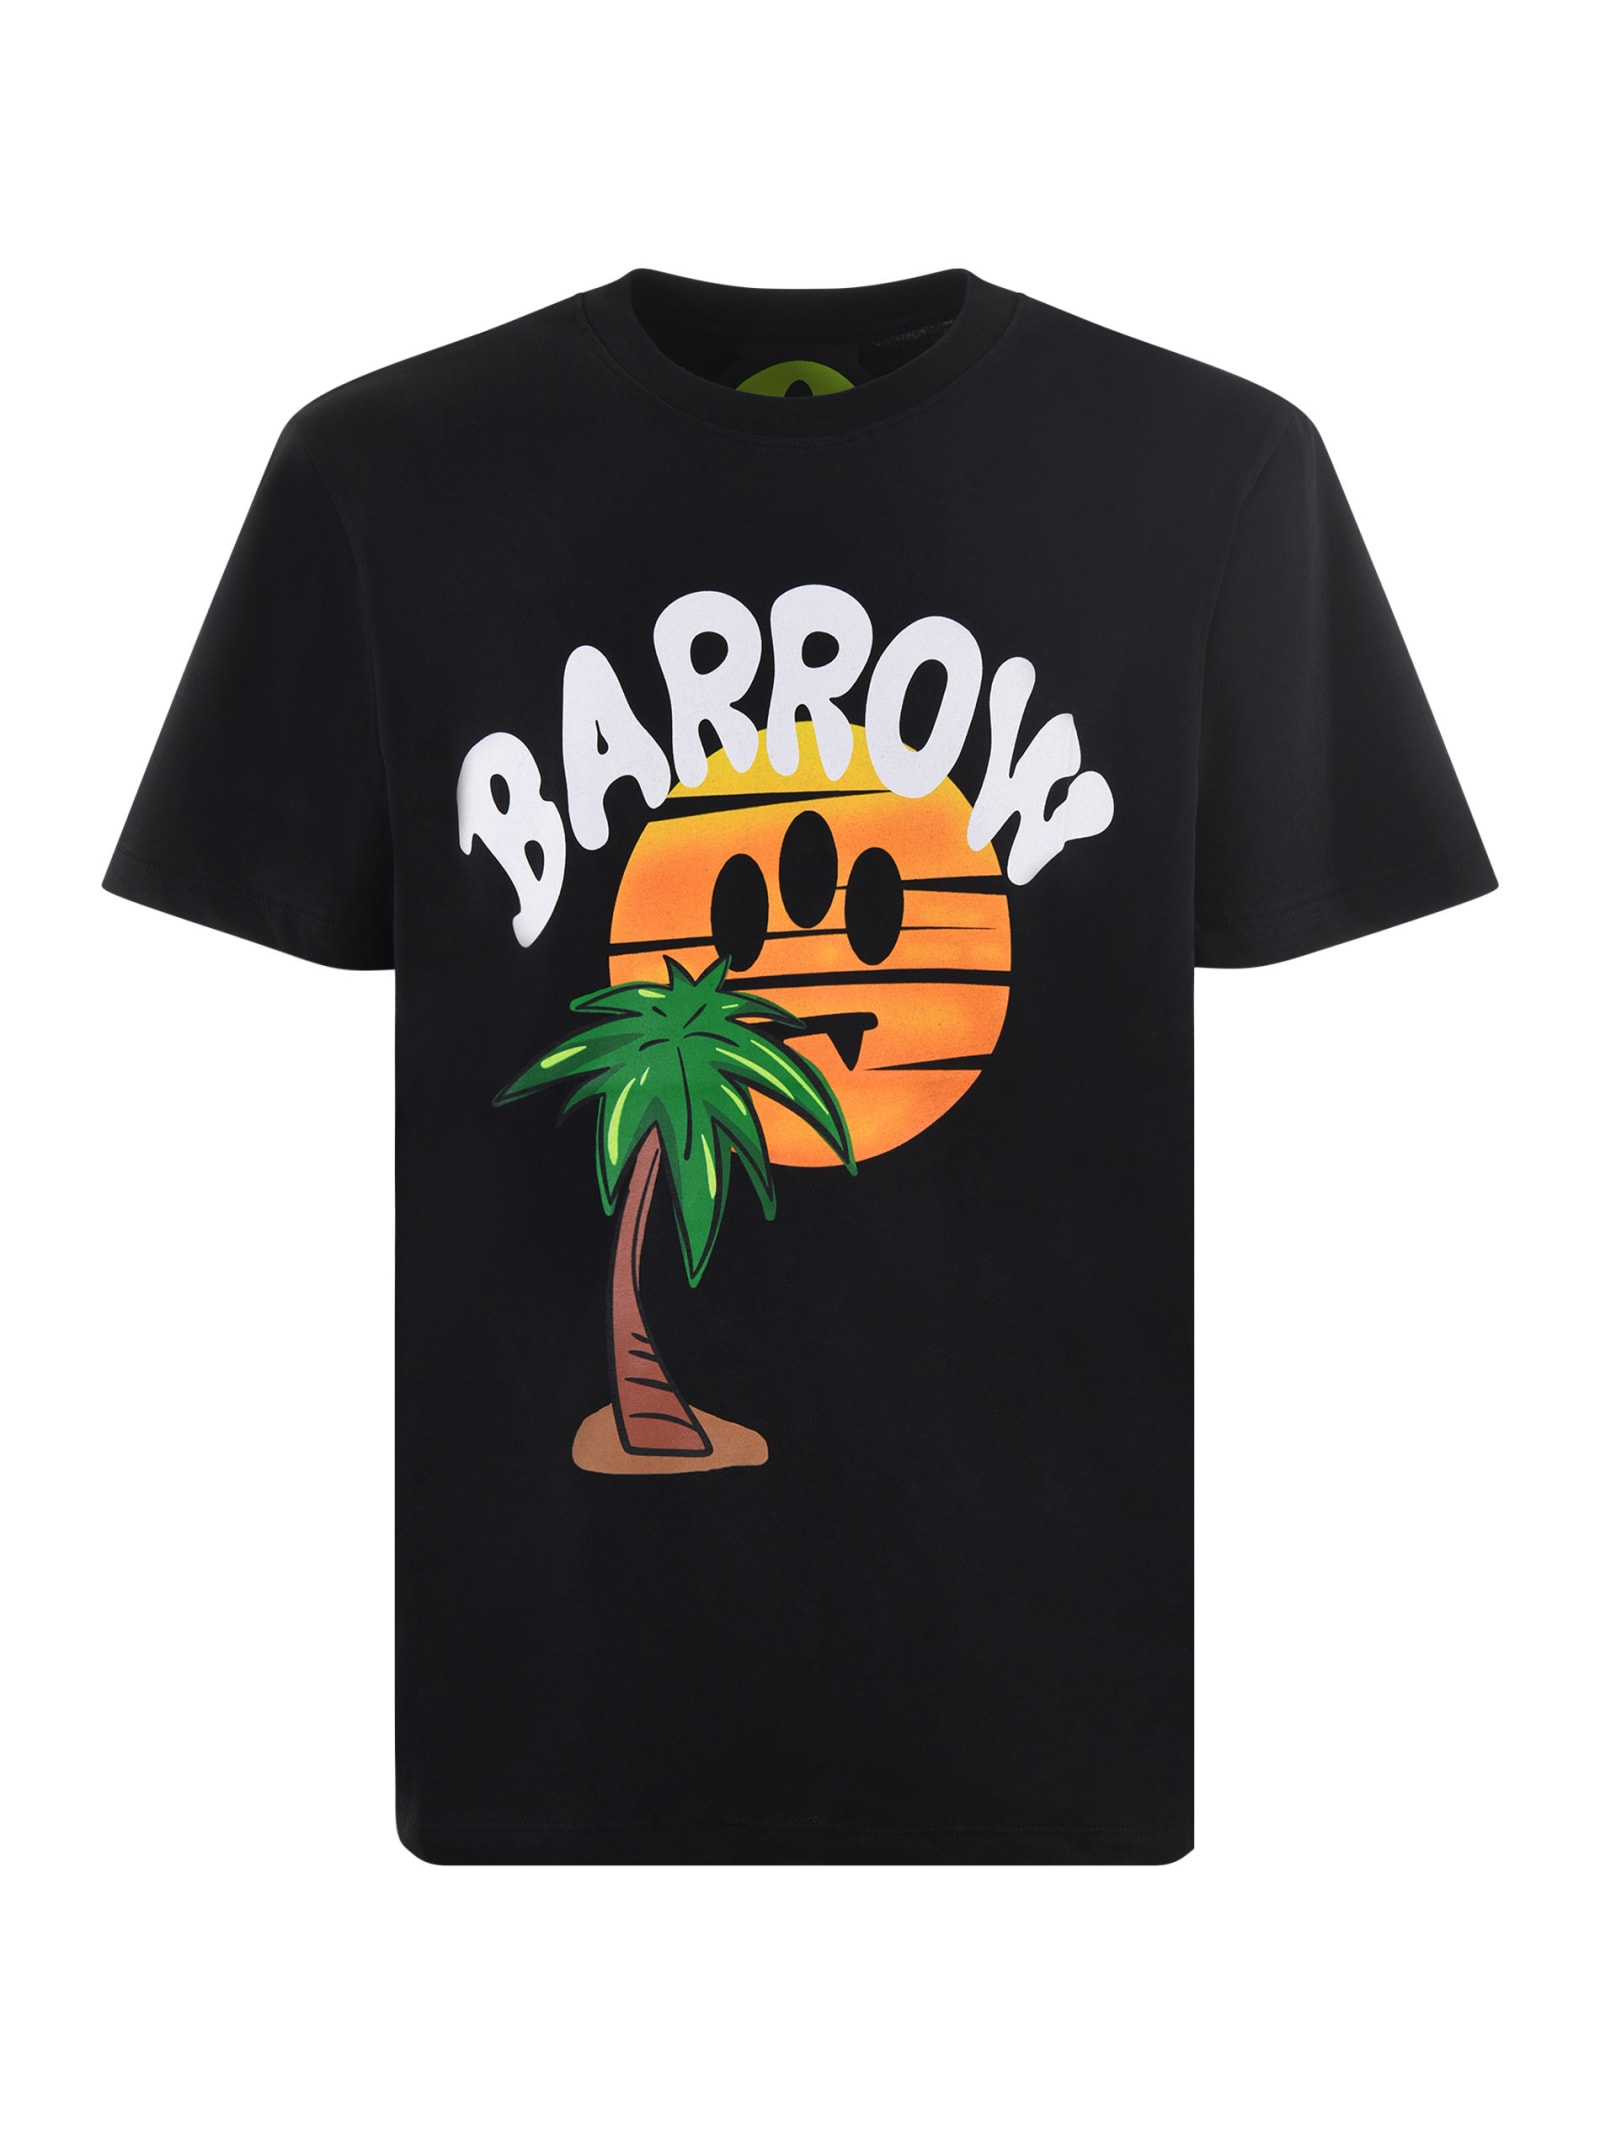 Shop Barrow Cotton T-shirt In Nero